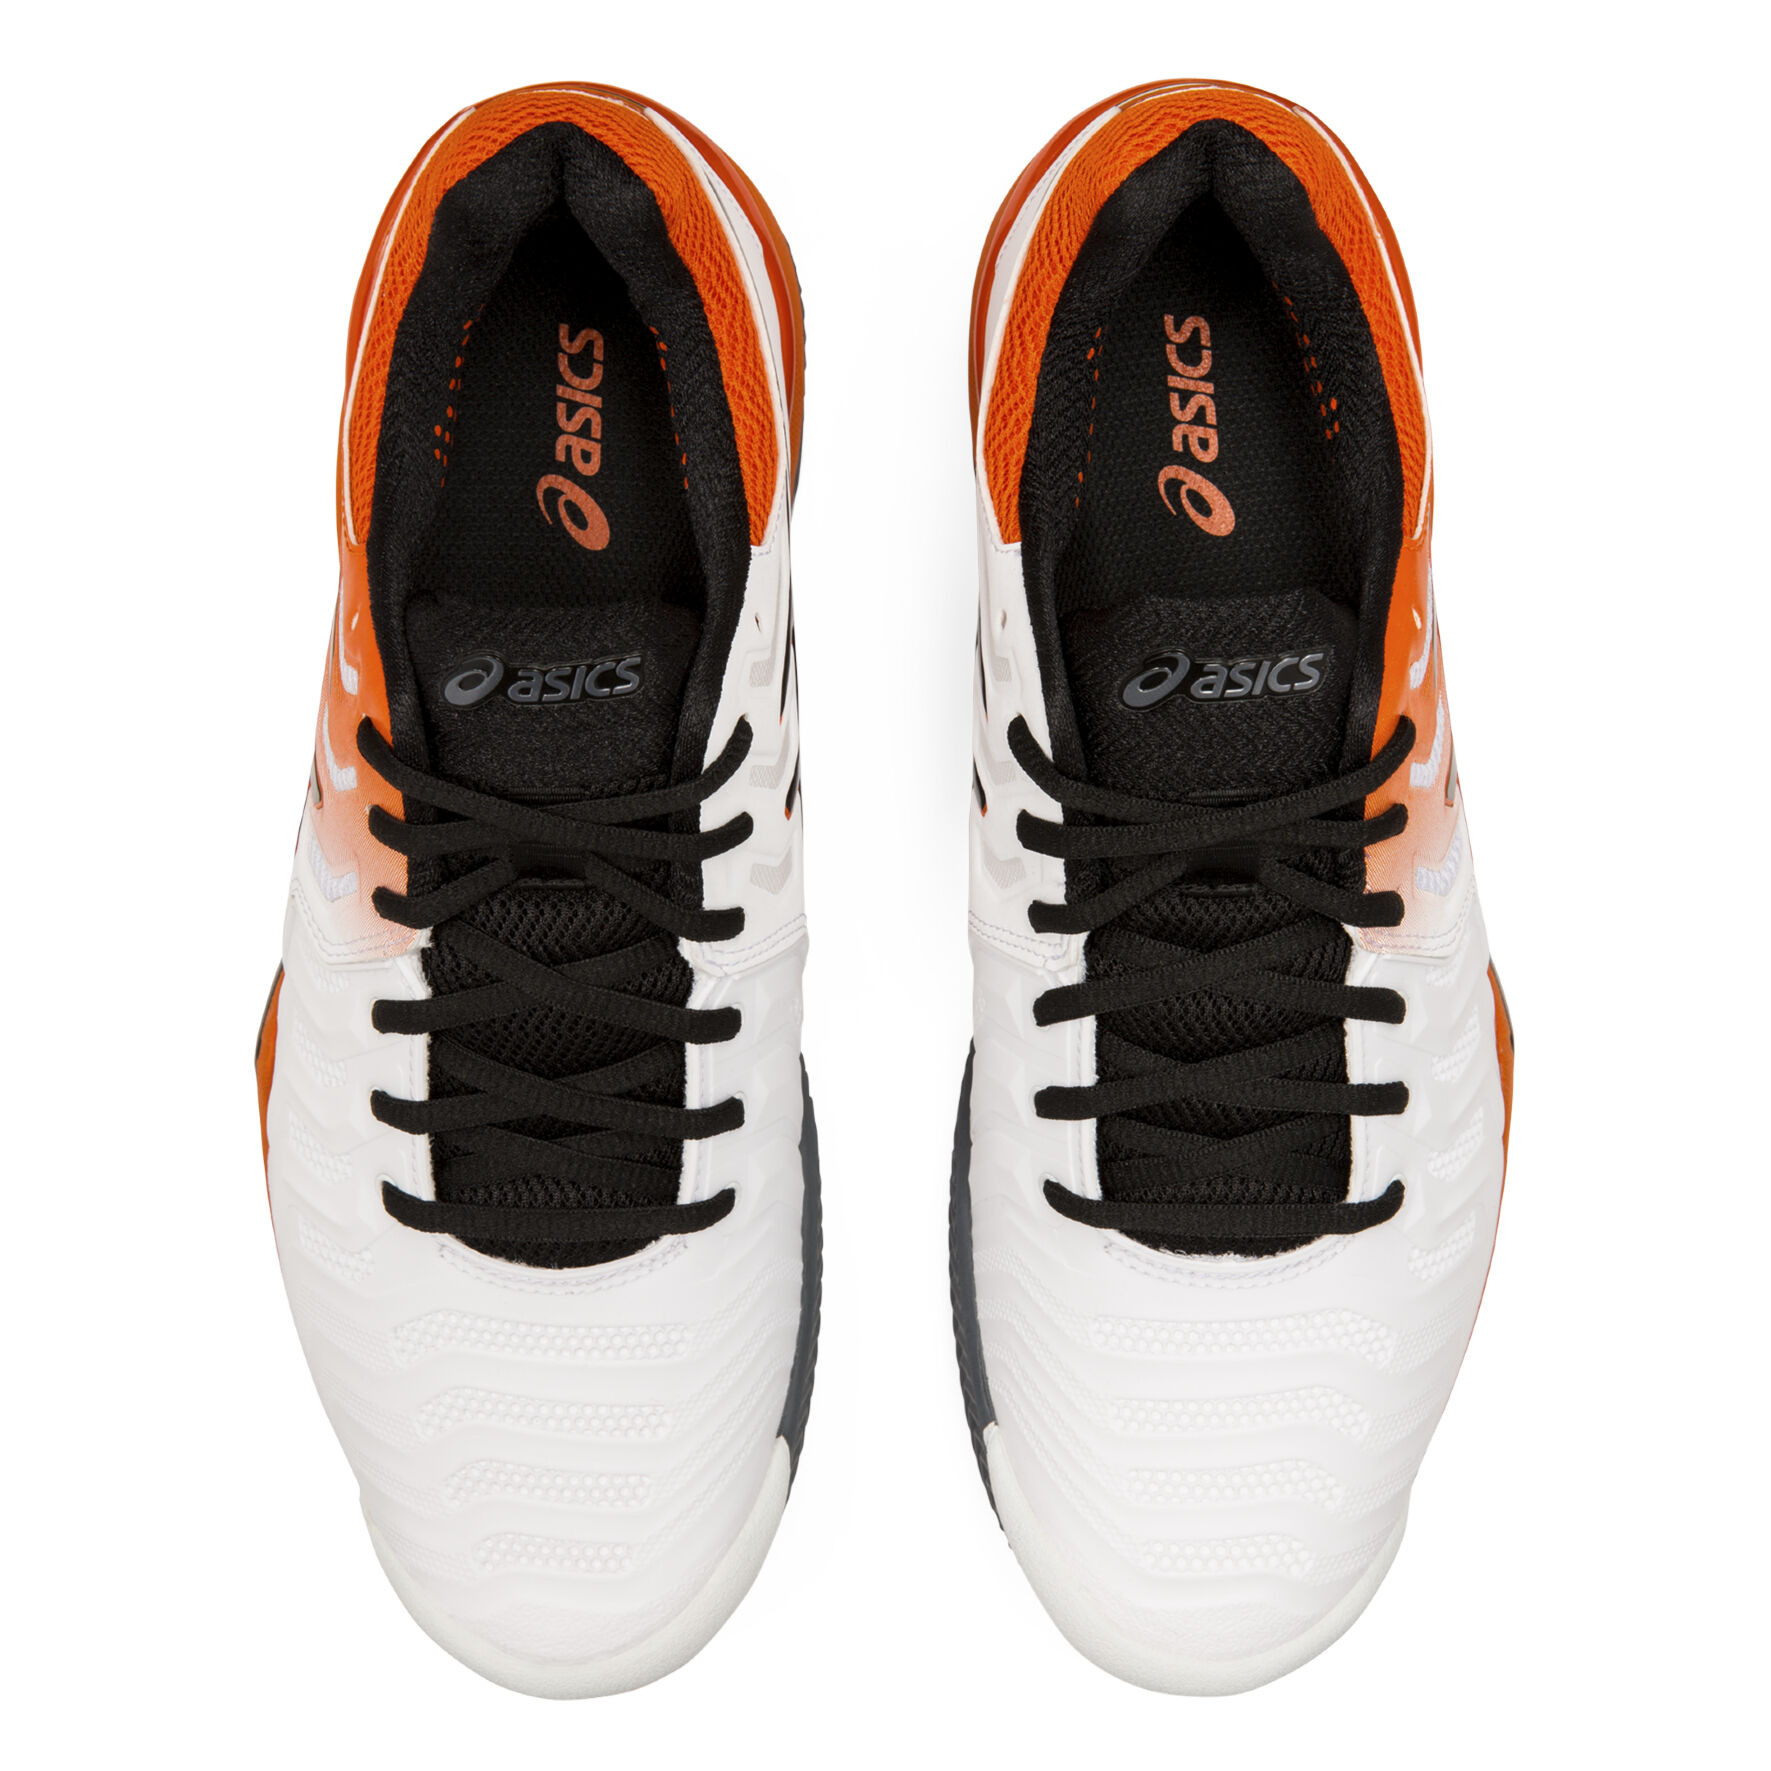 asics gel-resolution 7 scarpe da tennis uomo